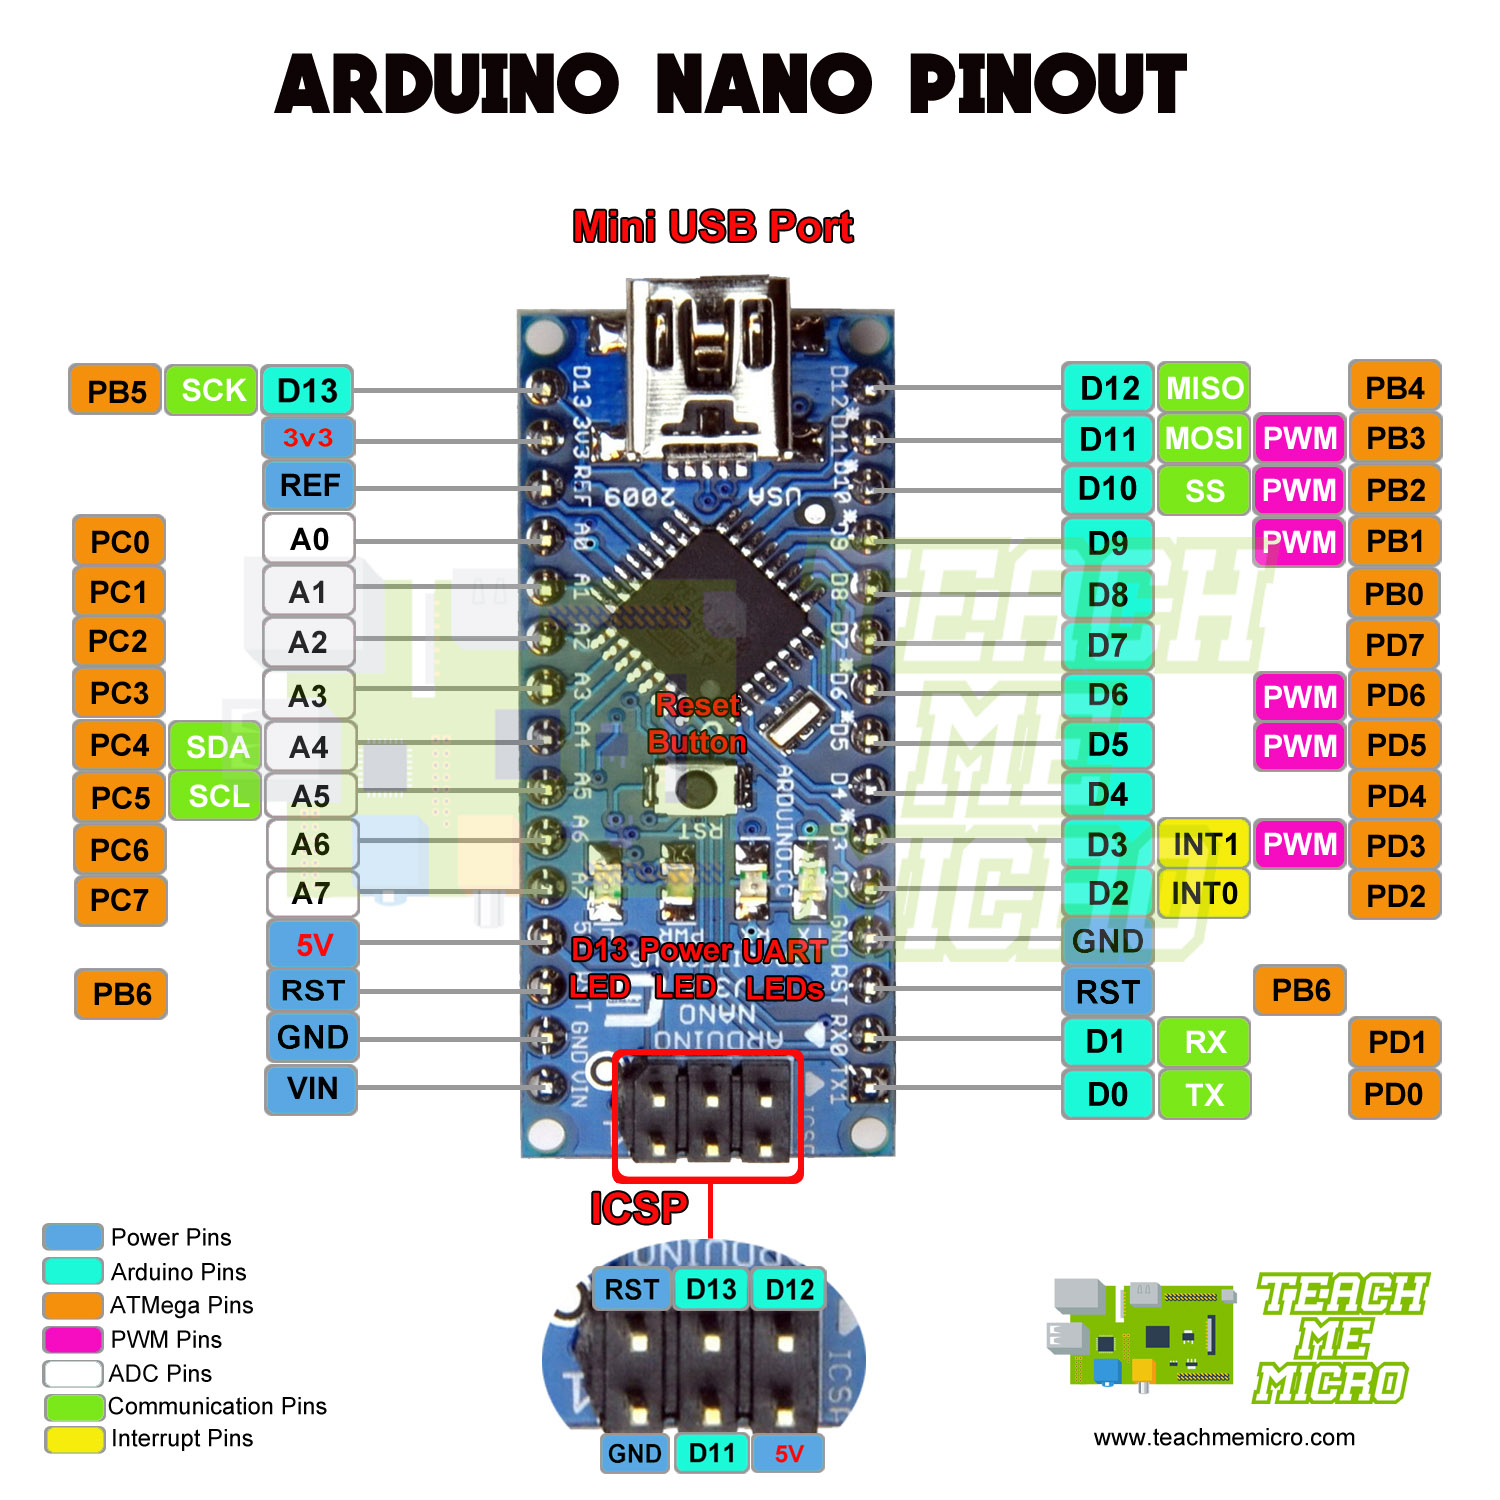 https://www.teachmemicro.com/wp-content/uploads/2019/06/Arduino-Nano-pinout.jpg